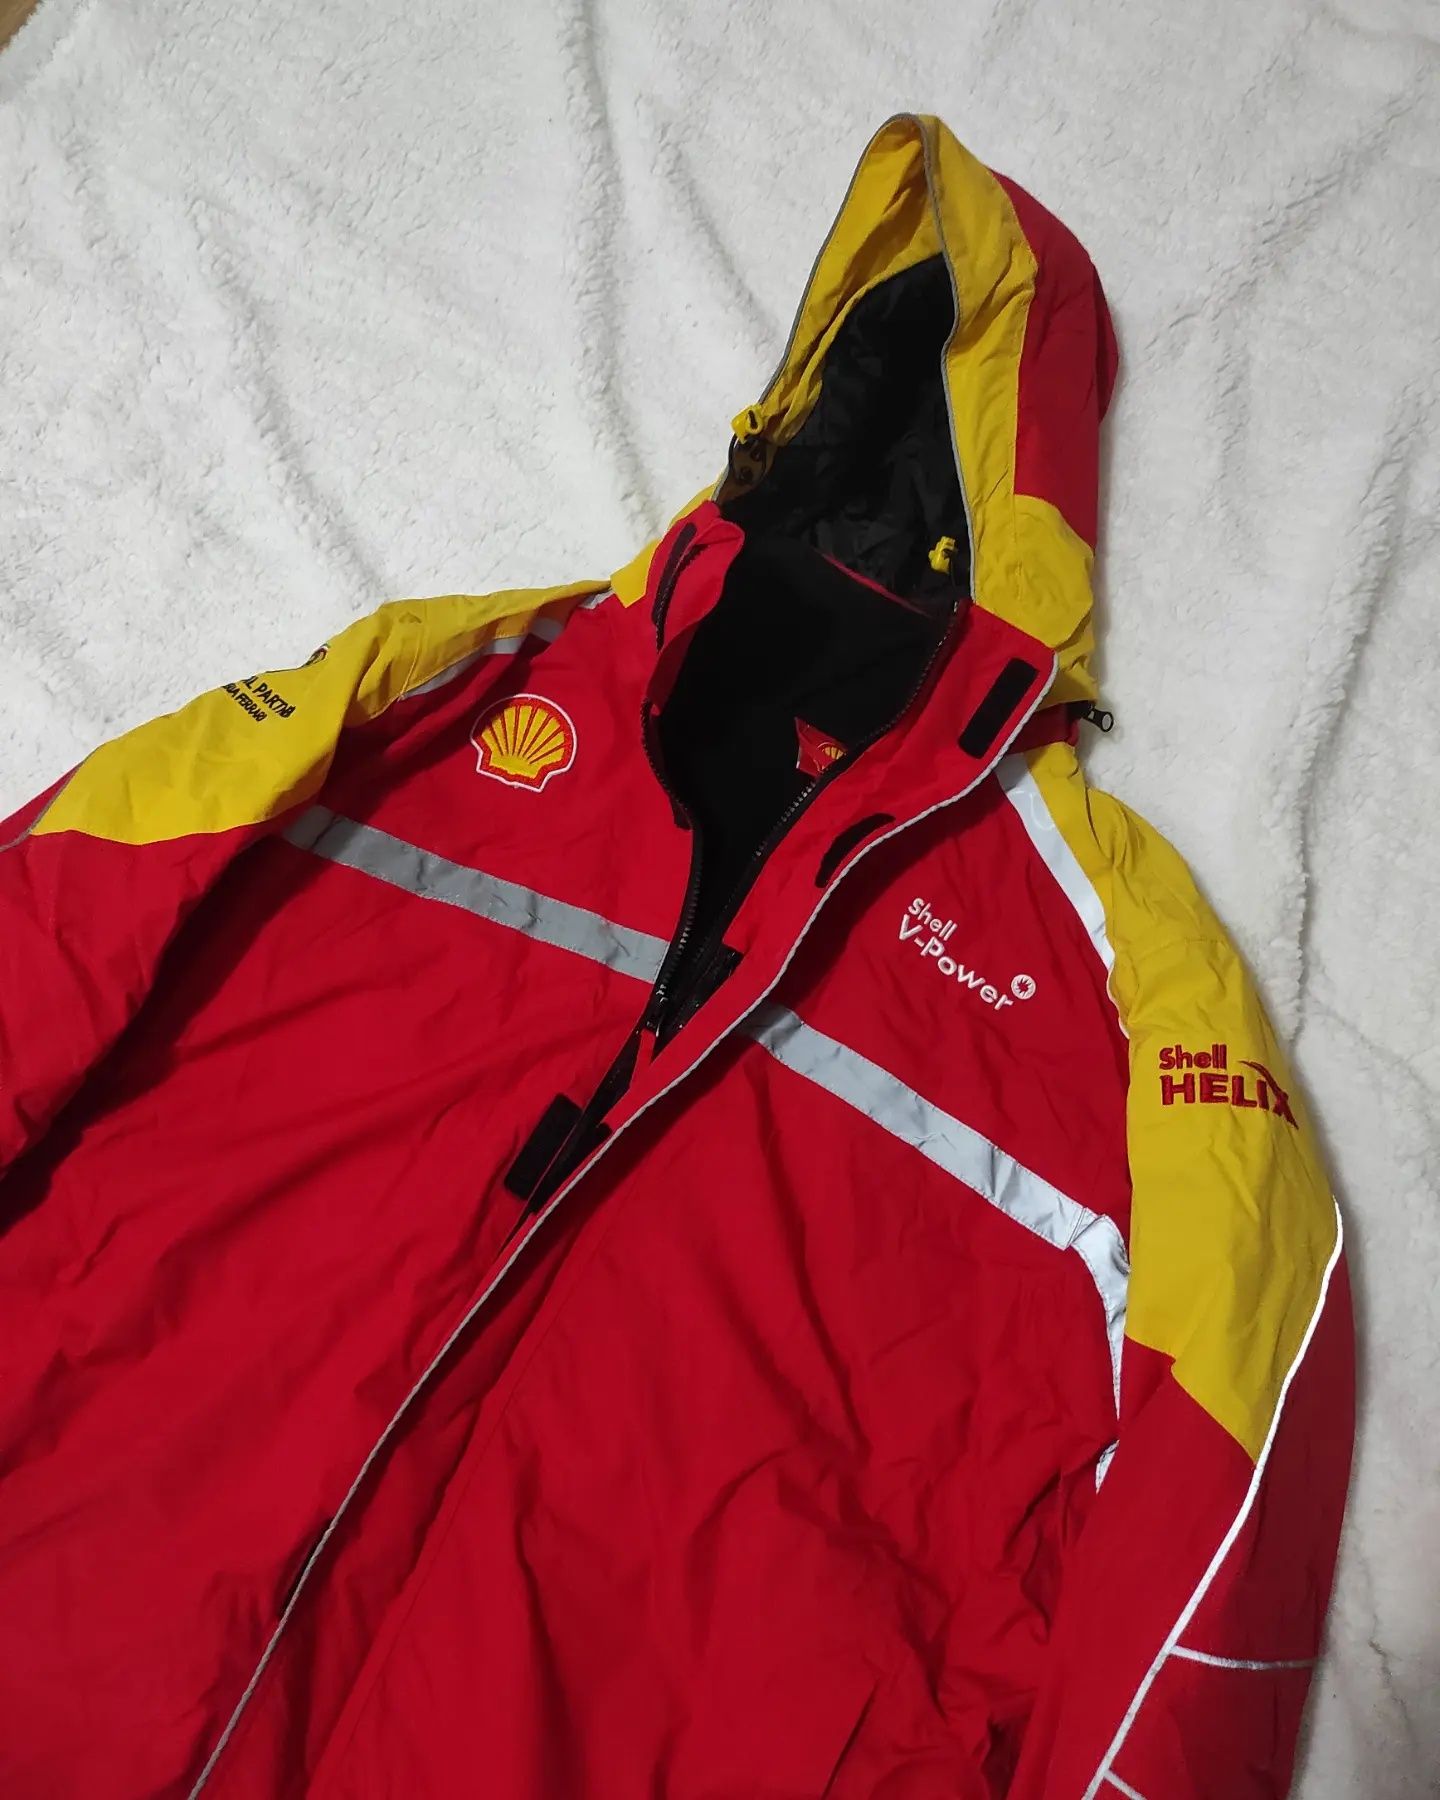 V Shell Ferrari jacket